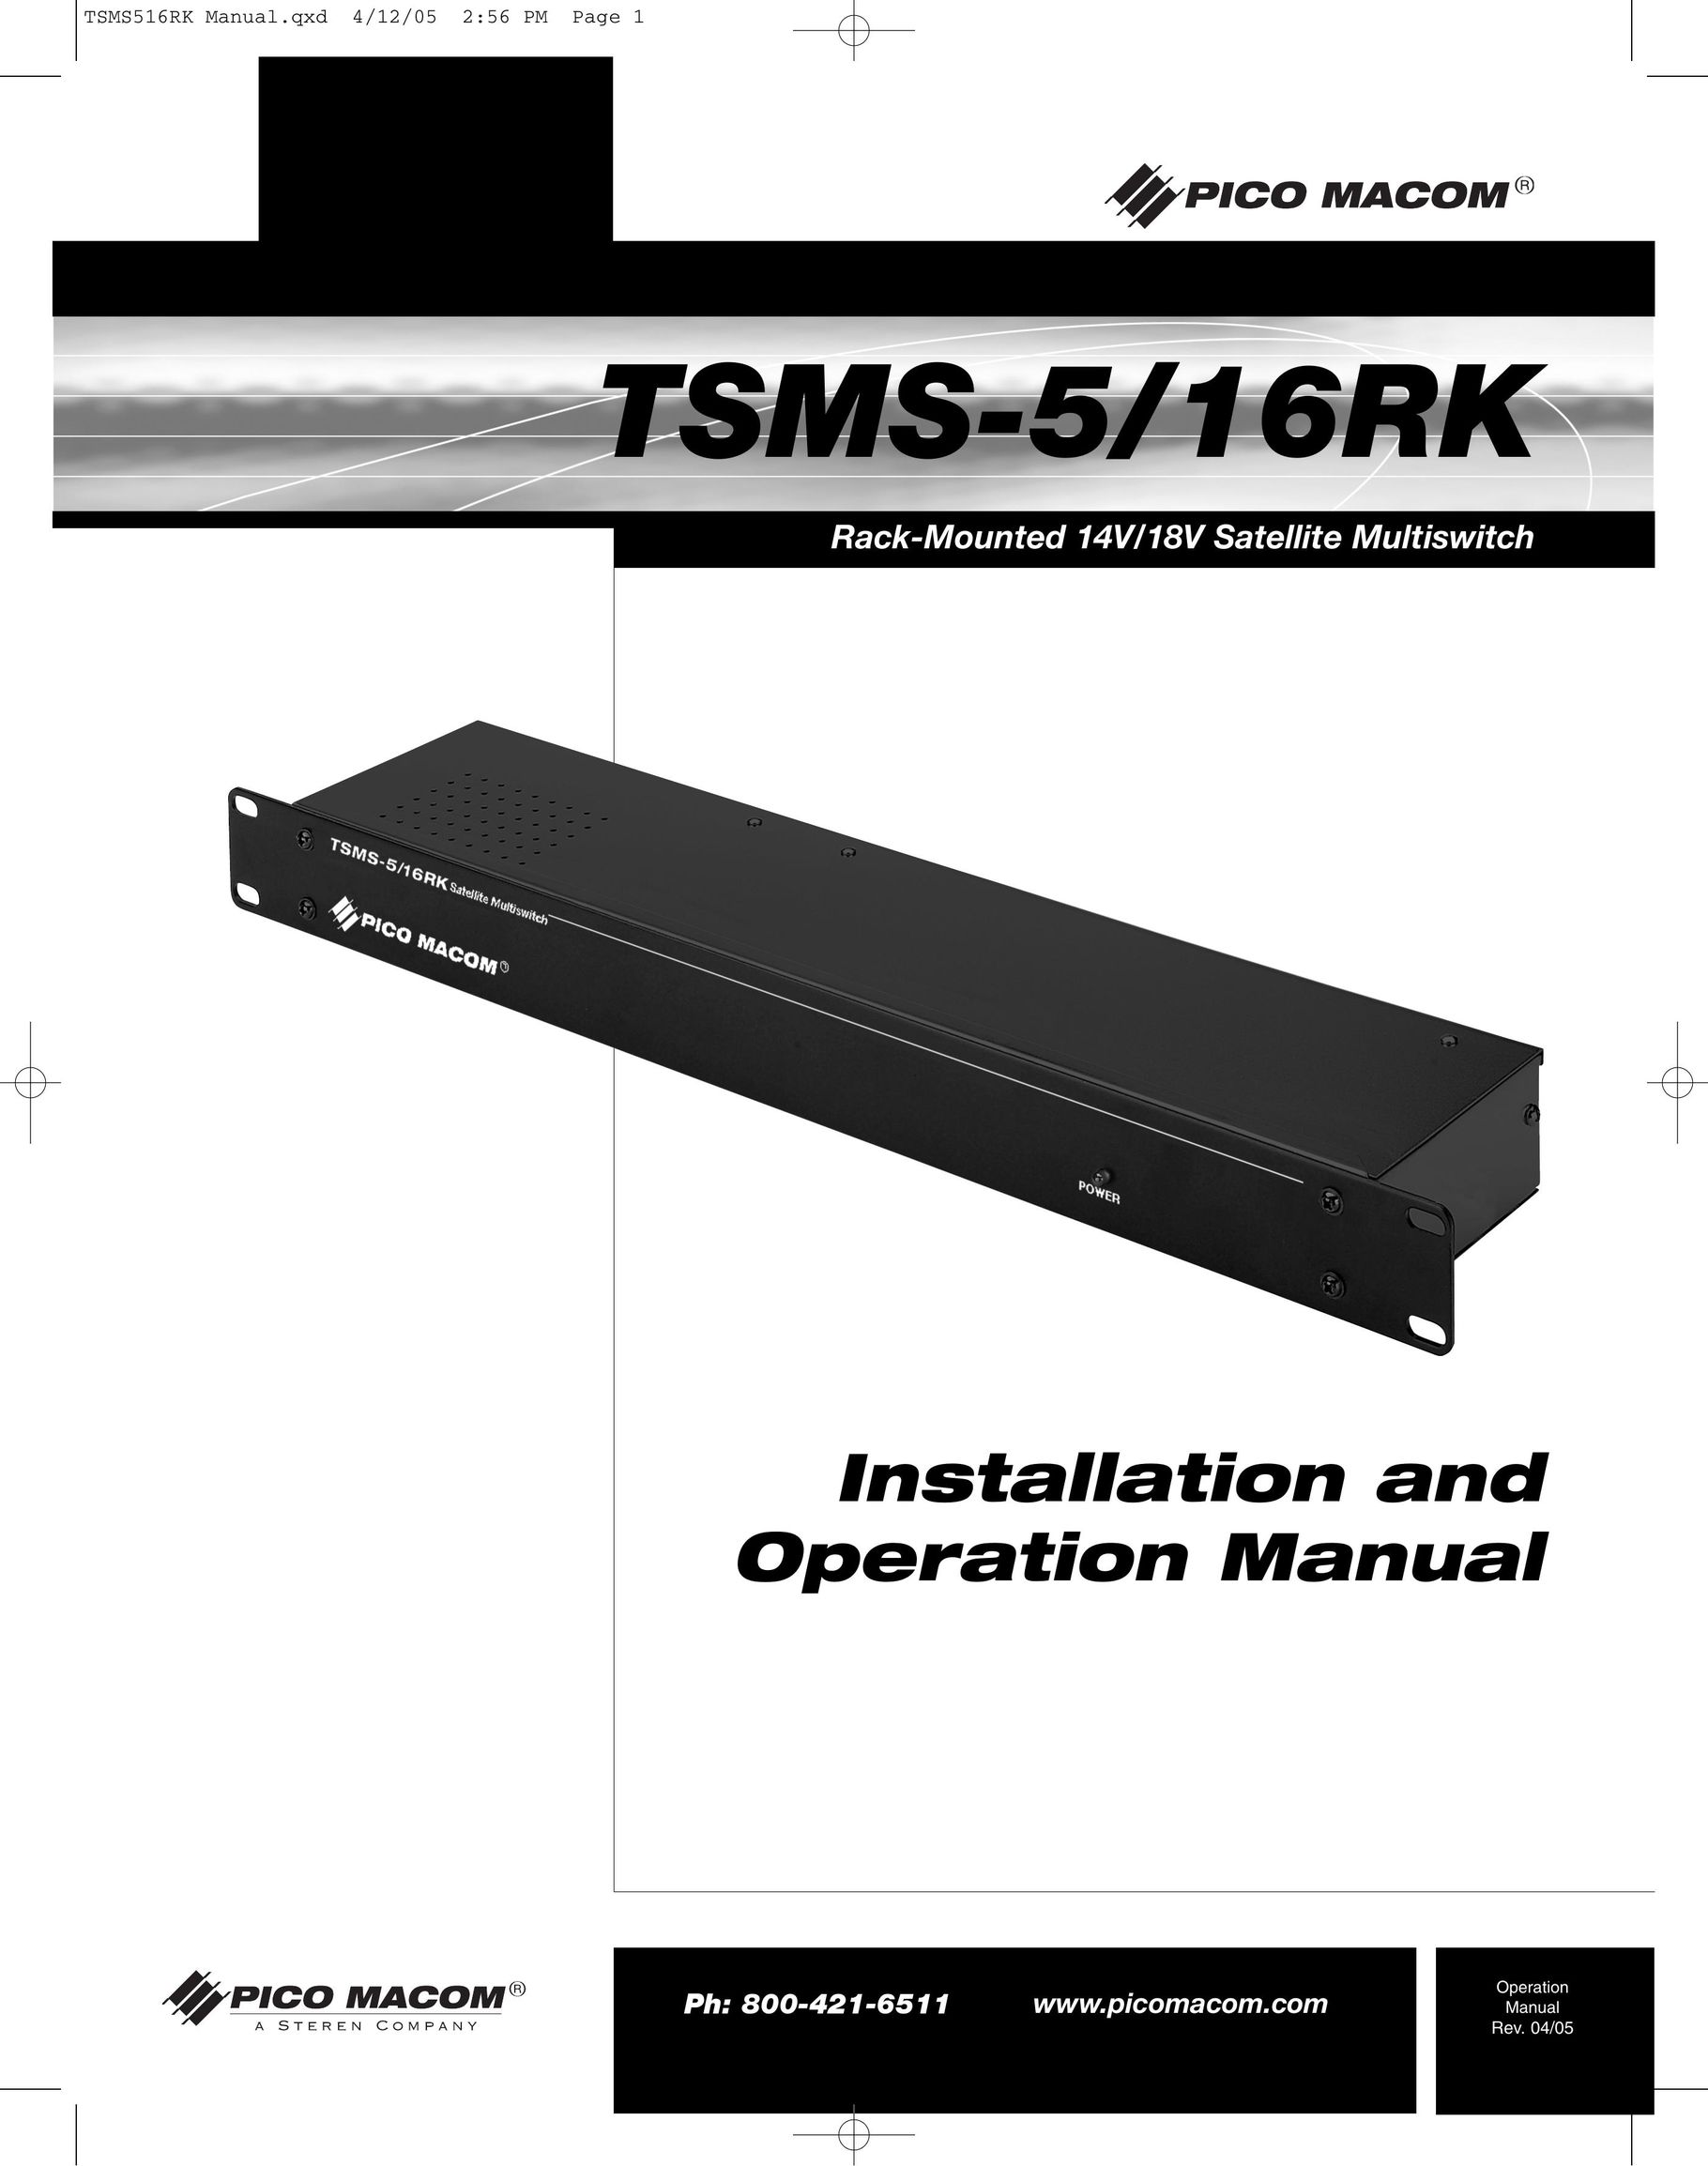 Pico Macom TSMS-5/16RK Switch User Manual